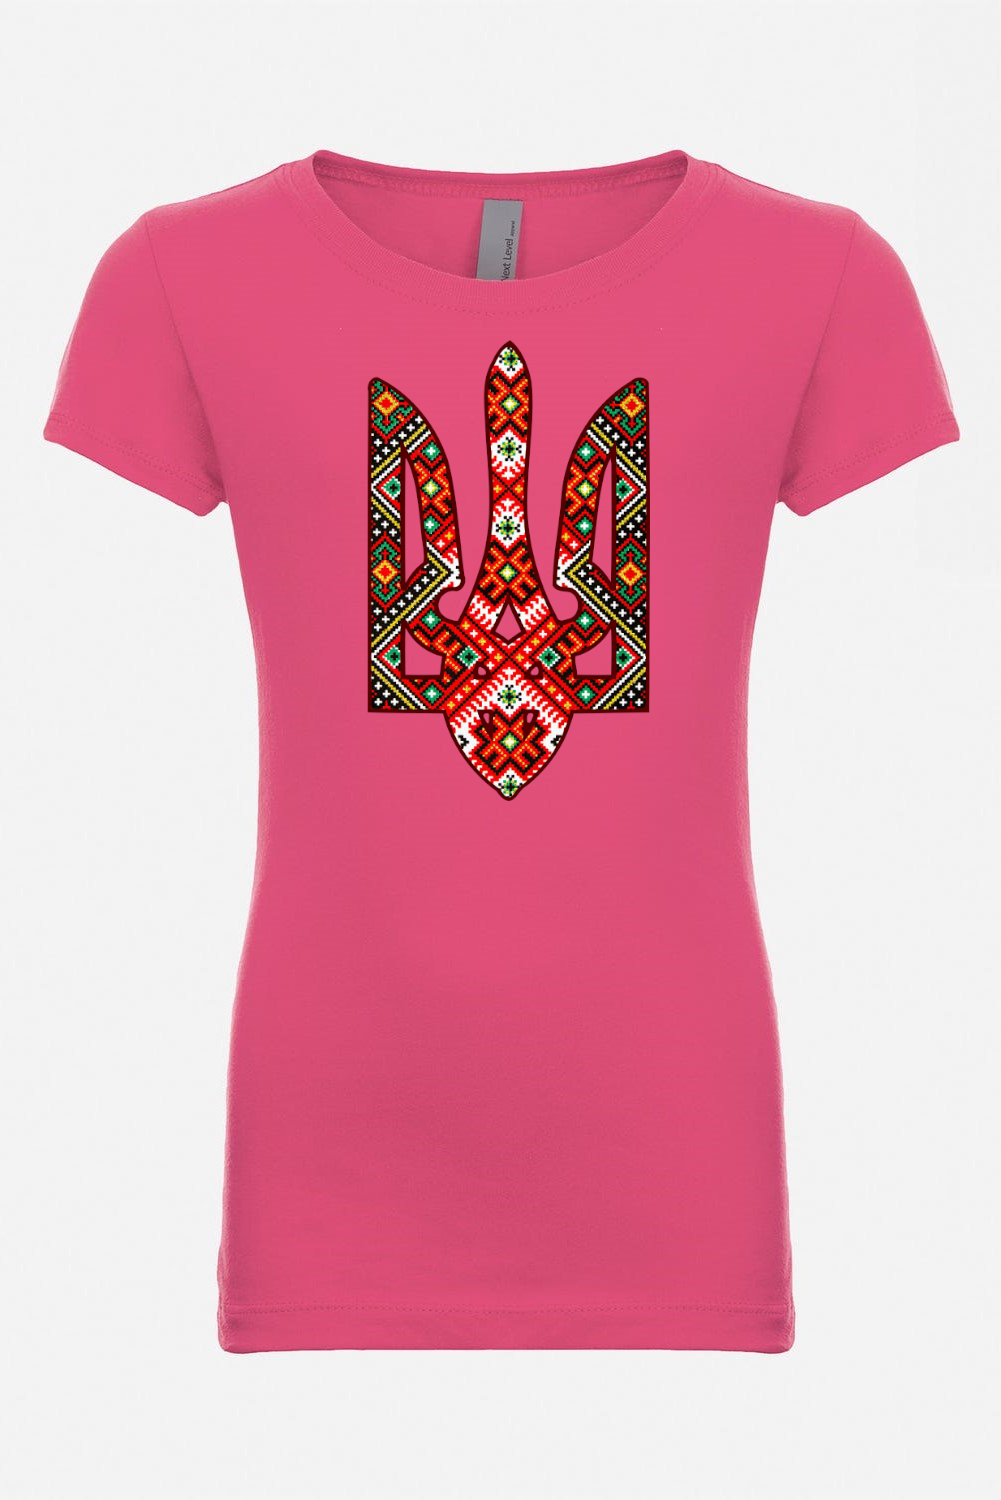 Girl's t-shirt "Etno Tryzub"